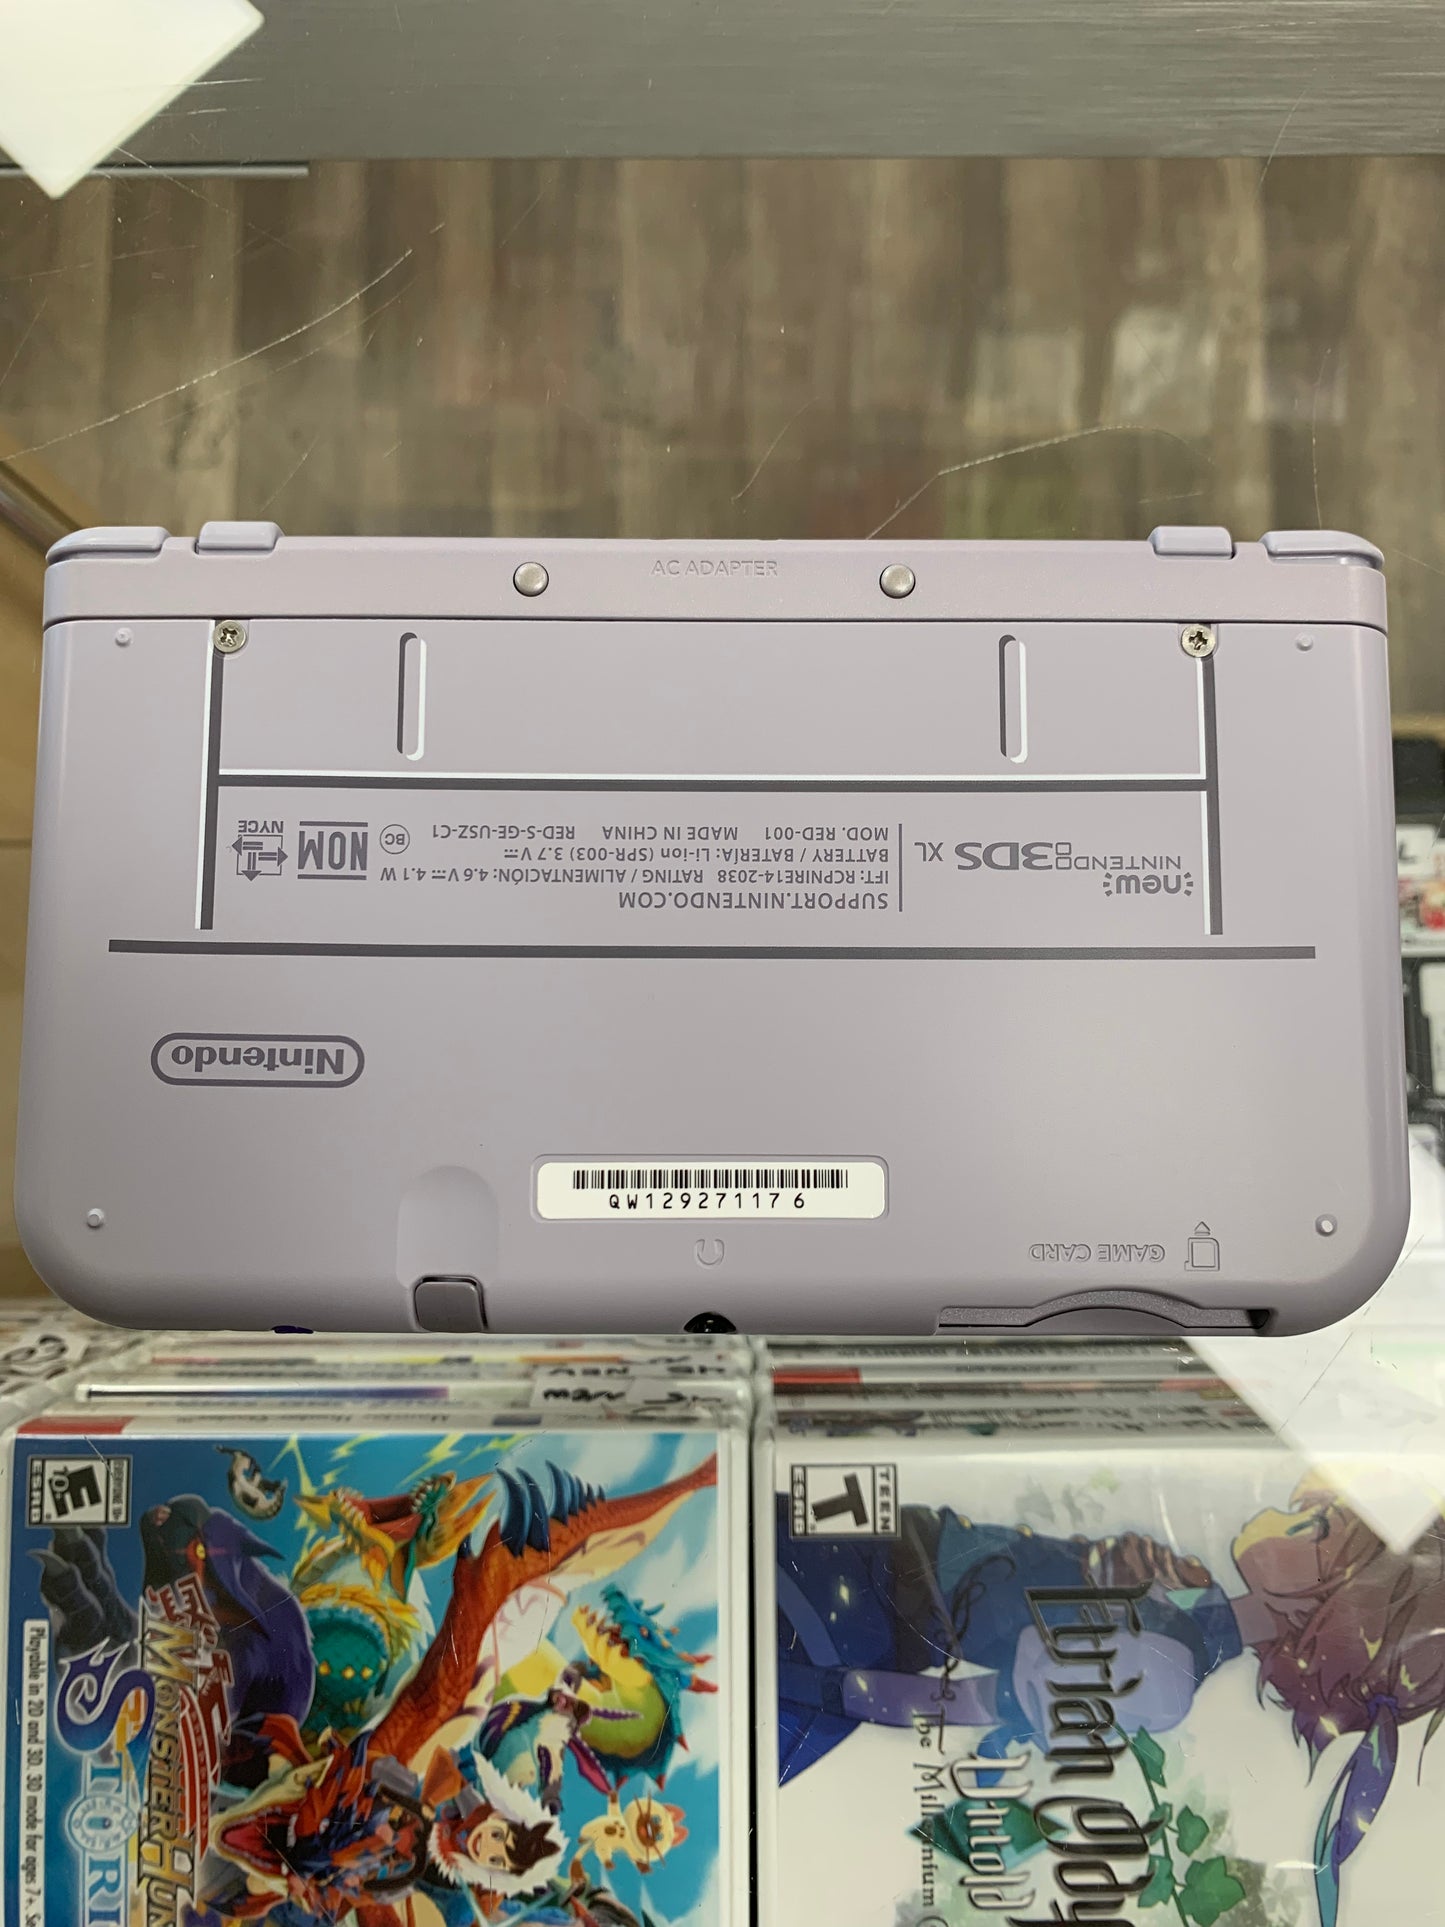 Super Nintendo Edition New Nintendo 3DS XL CIB with Digital Games